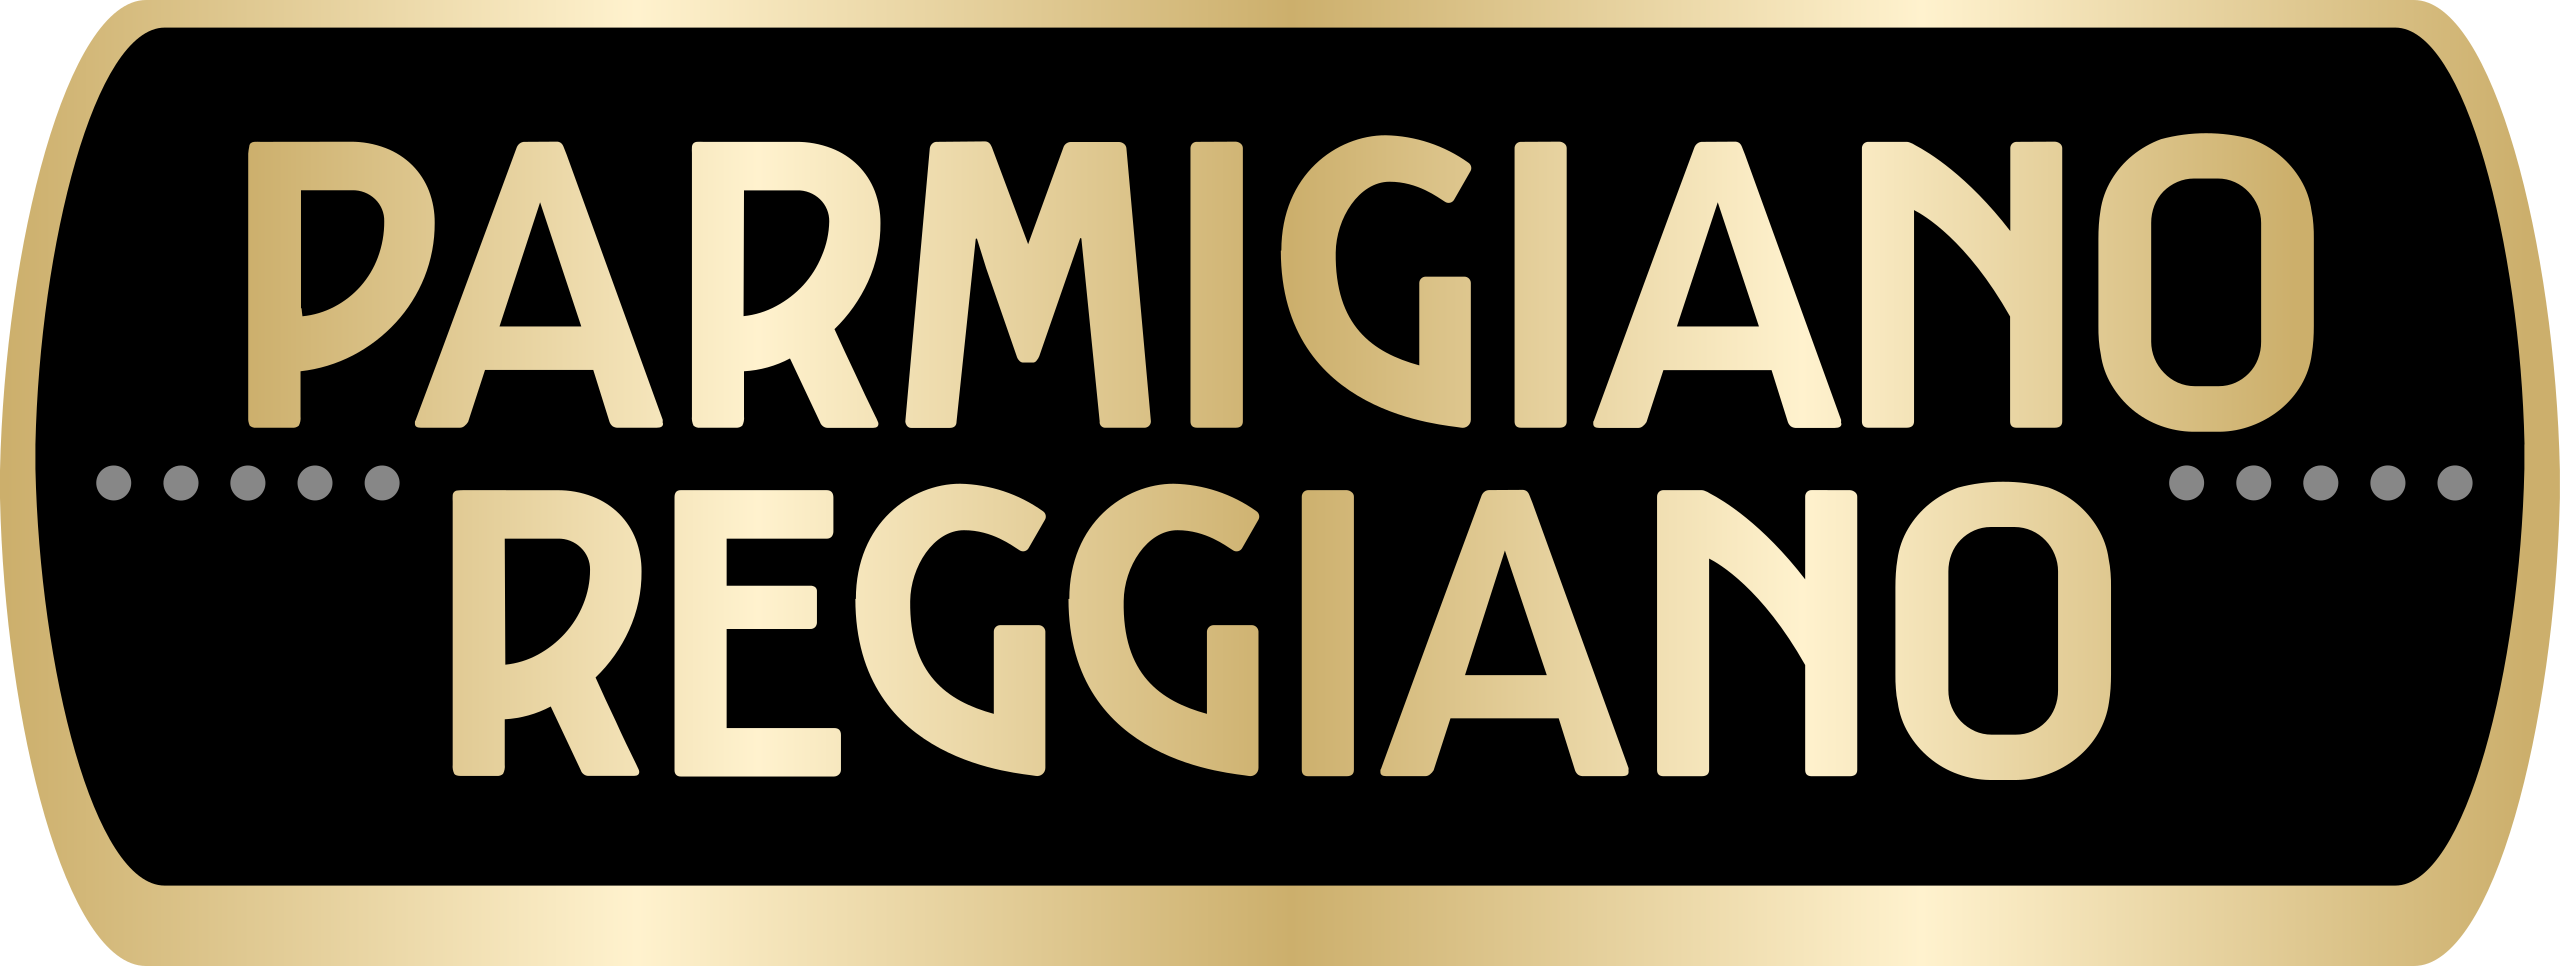 Parmigiano Reggiano : Brand Short Description Type Here.